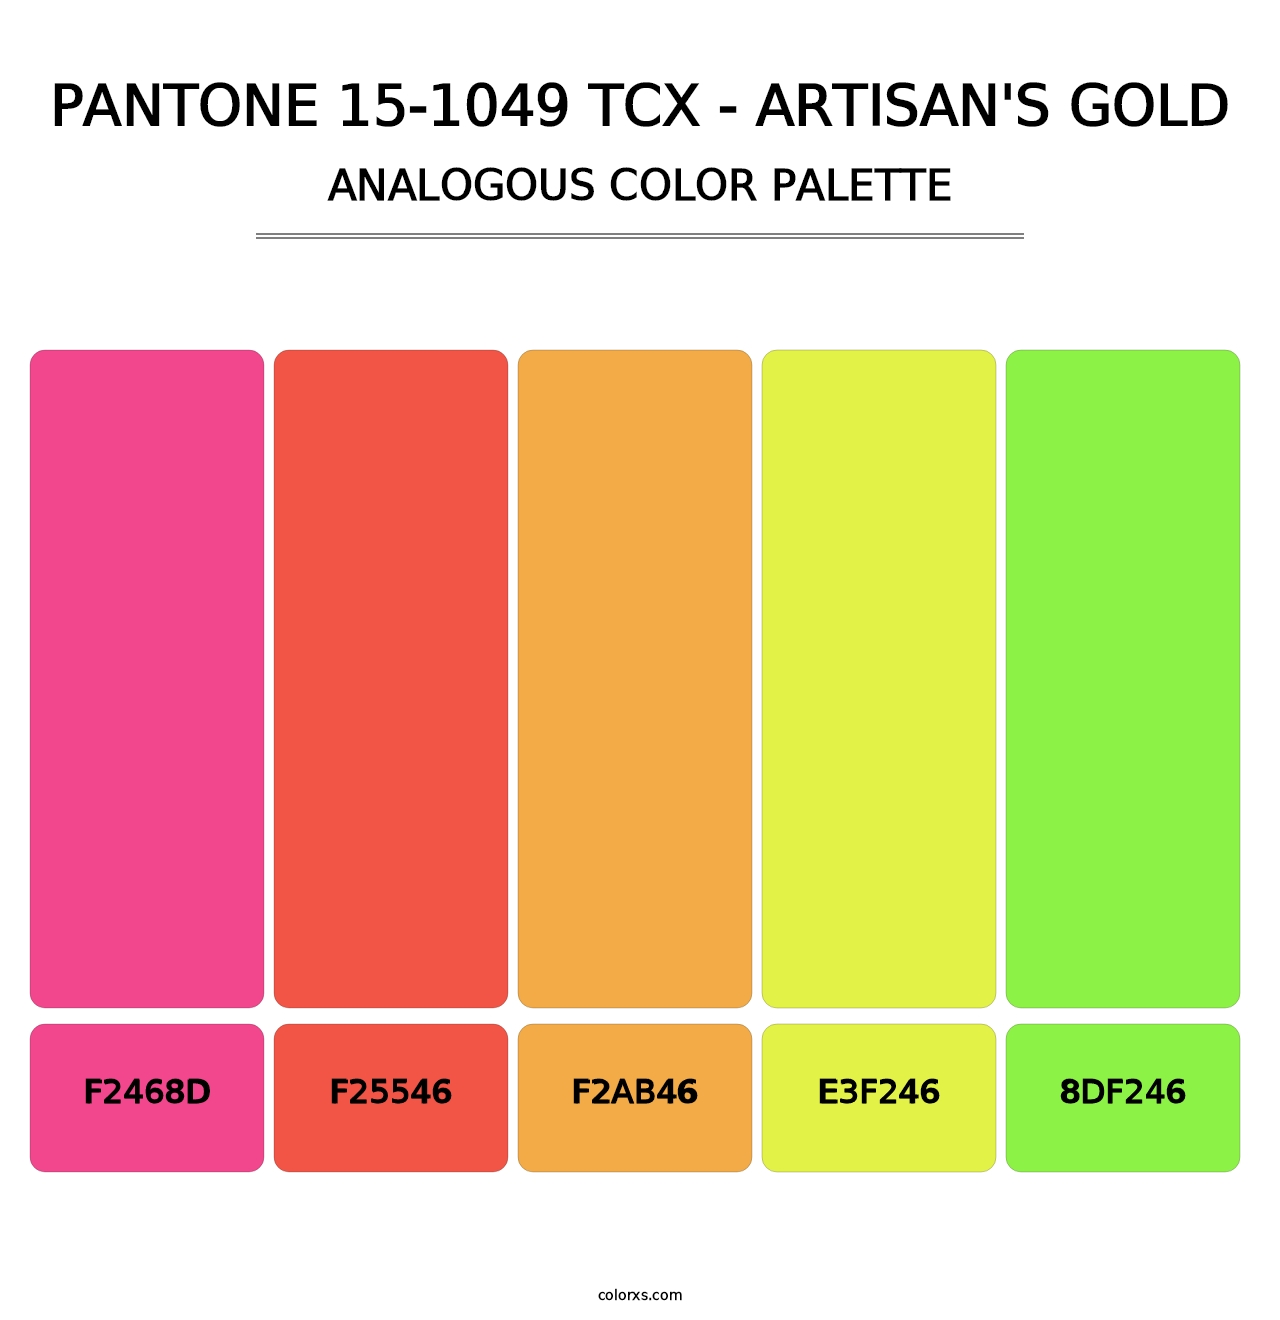 PANTONE 15-1049 TCX - Artisan's Gold - Analogous Color Palette